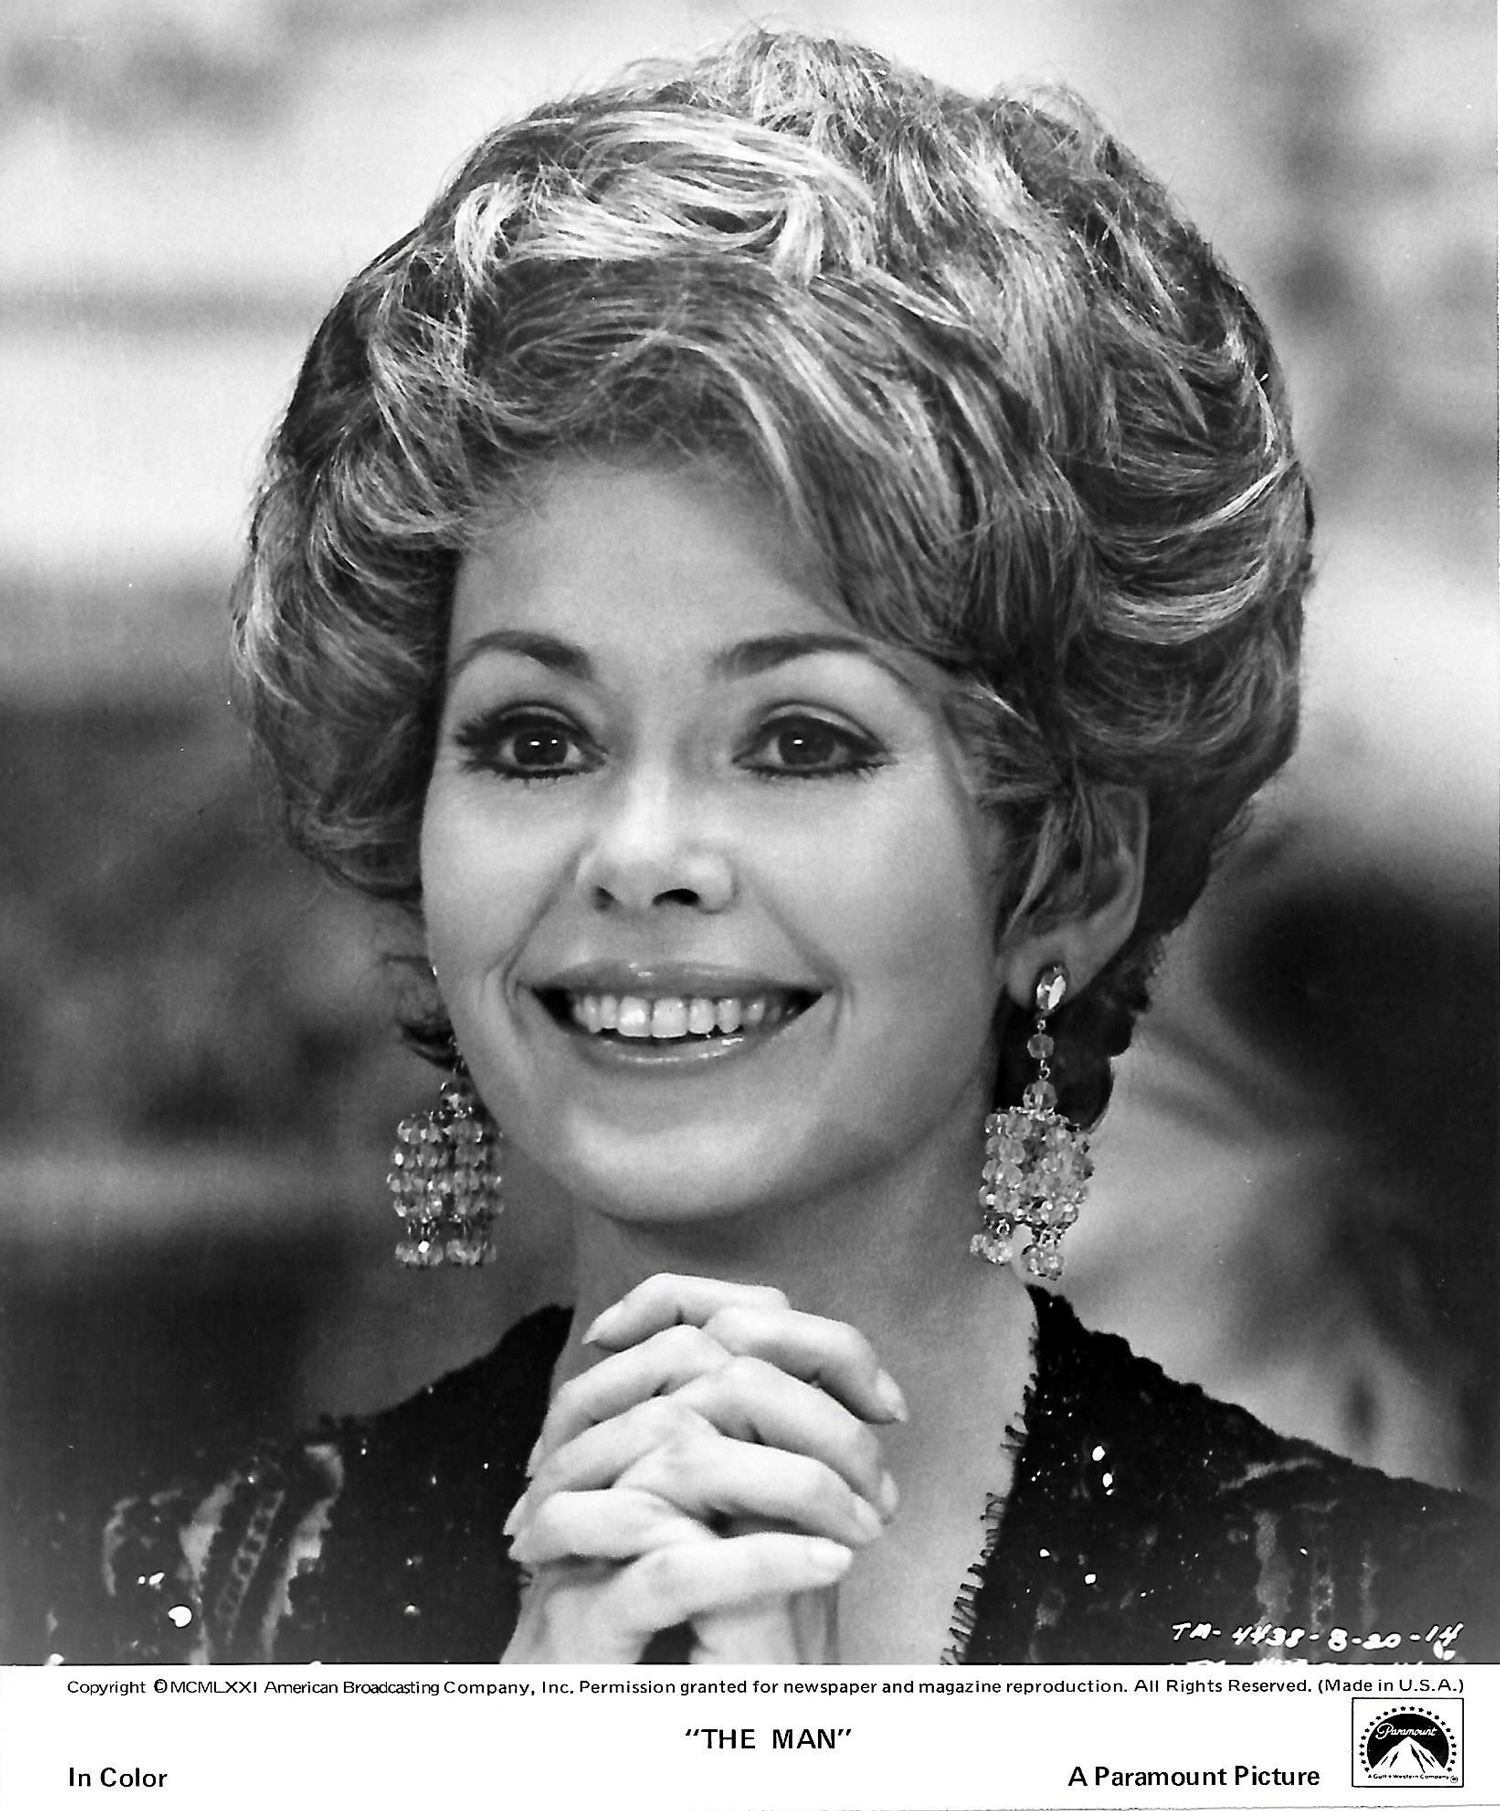  Barbara Rush, as “Kay Eaton”, the hostess 